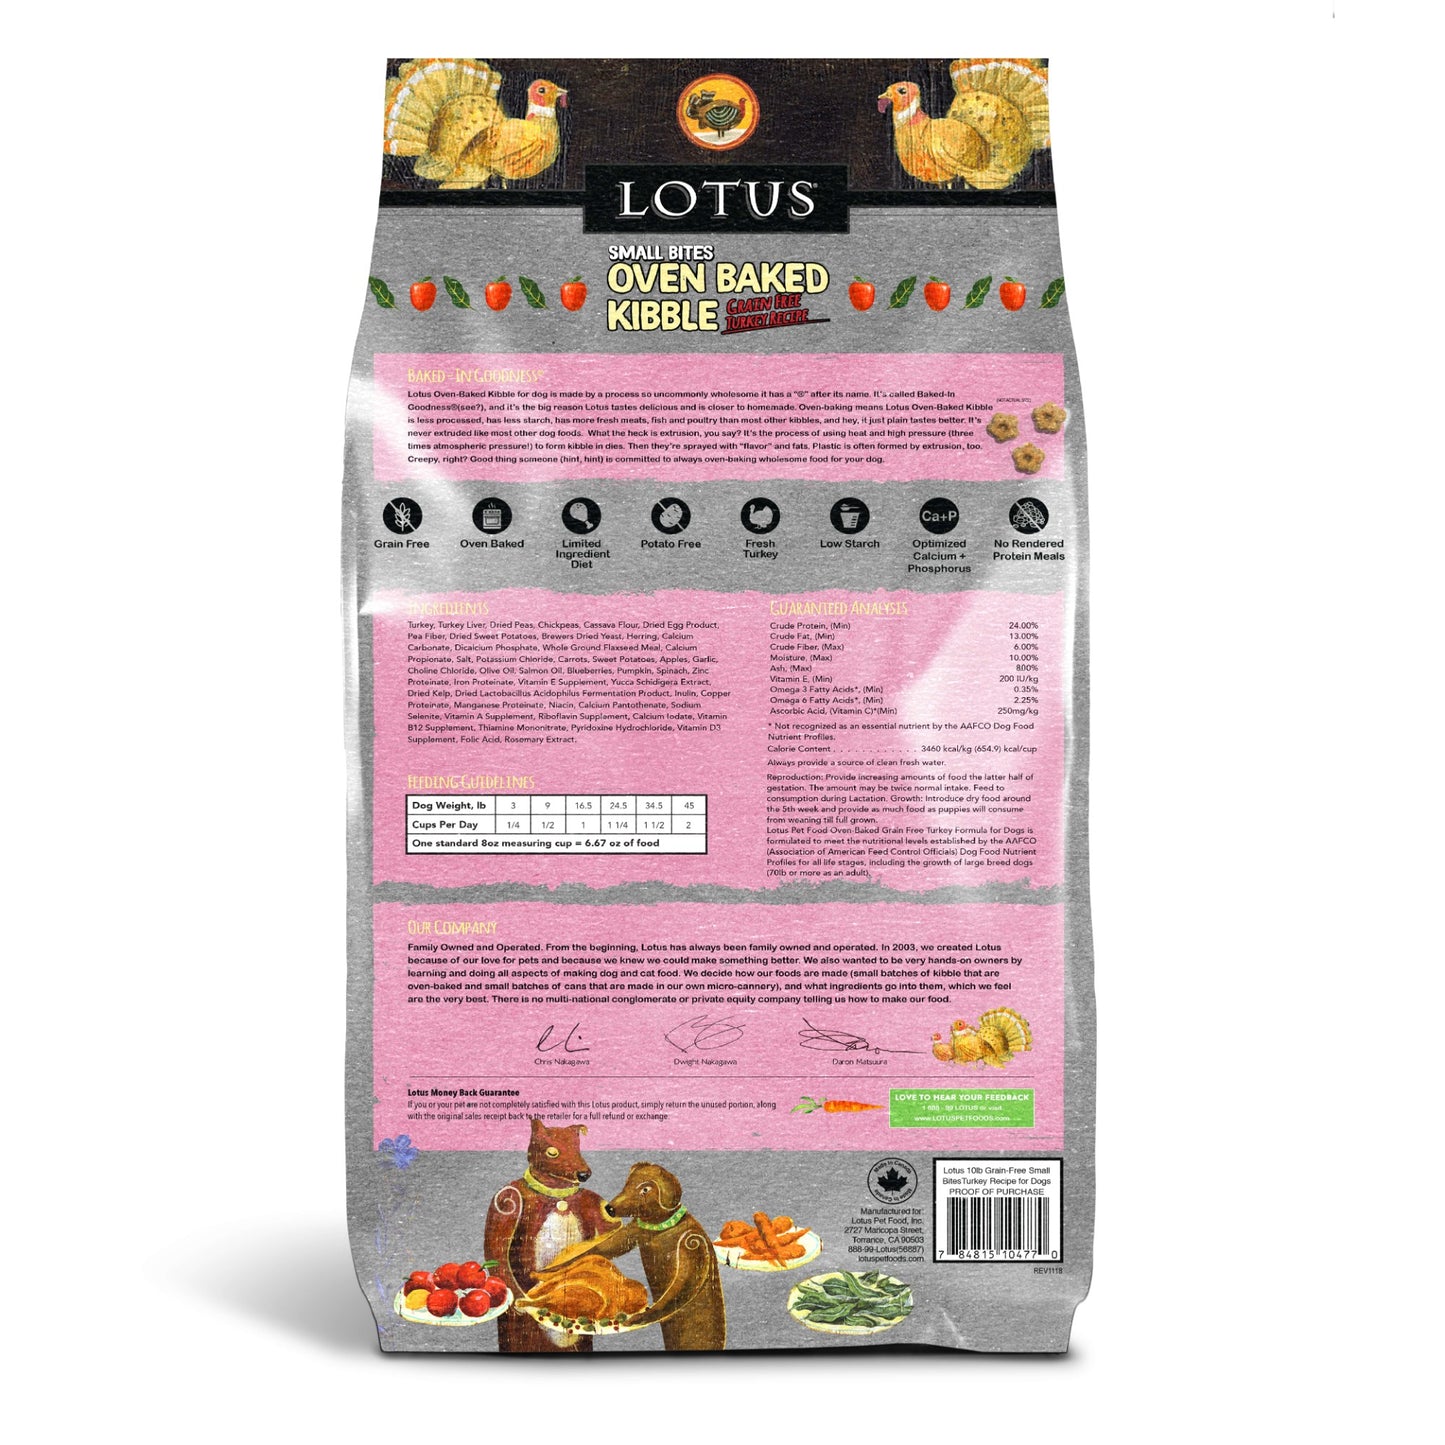 Lotus Small Bites Grain Free Turkey Recipe Dog Kibble